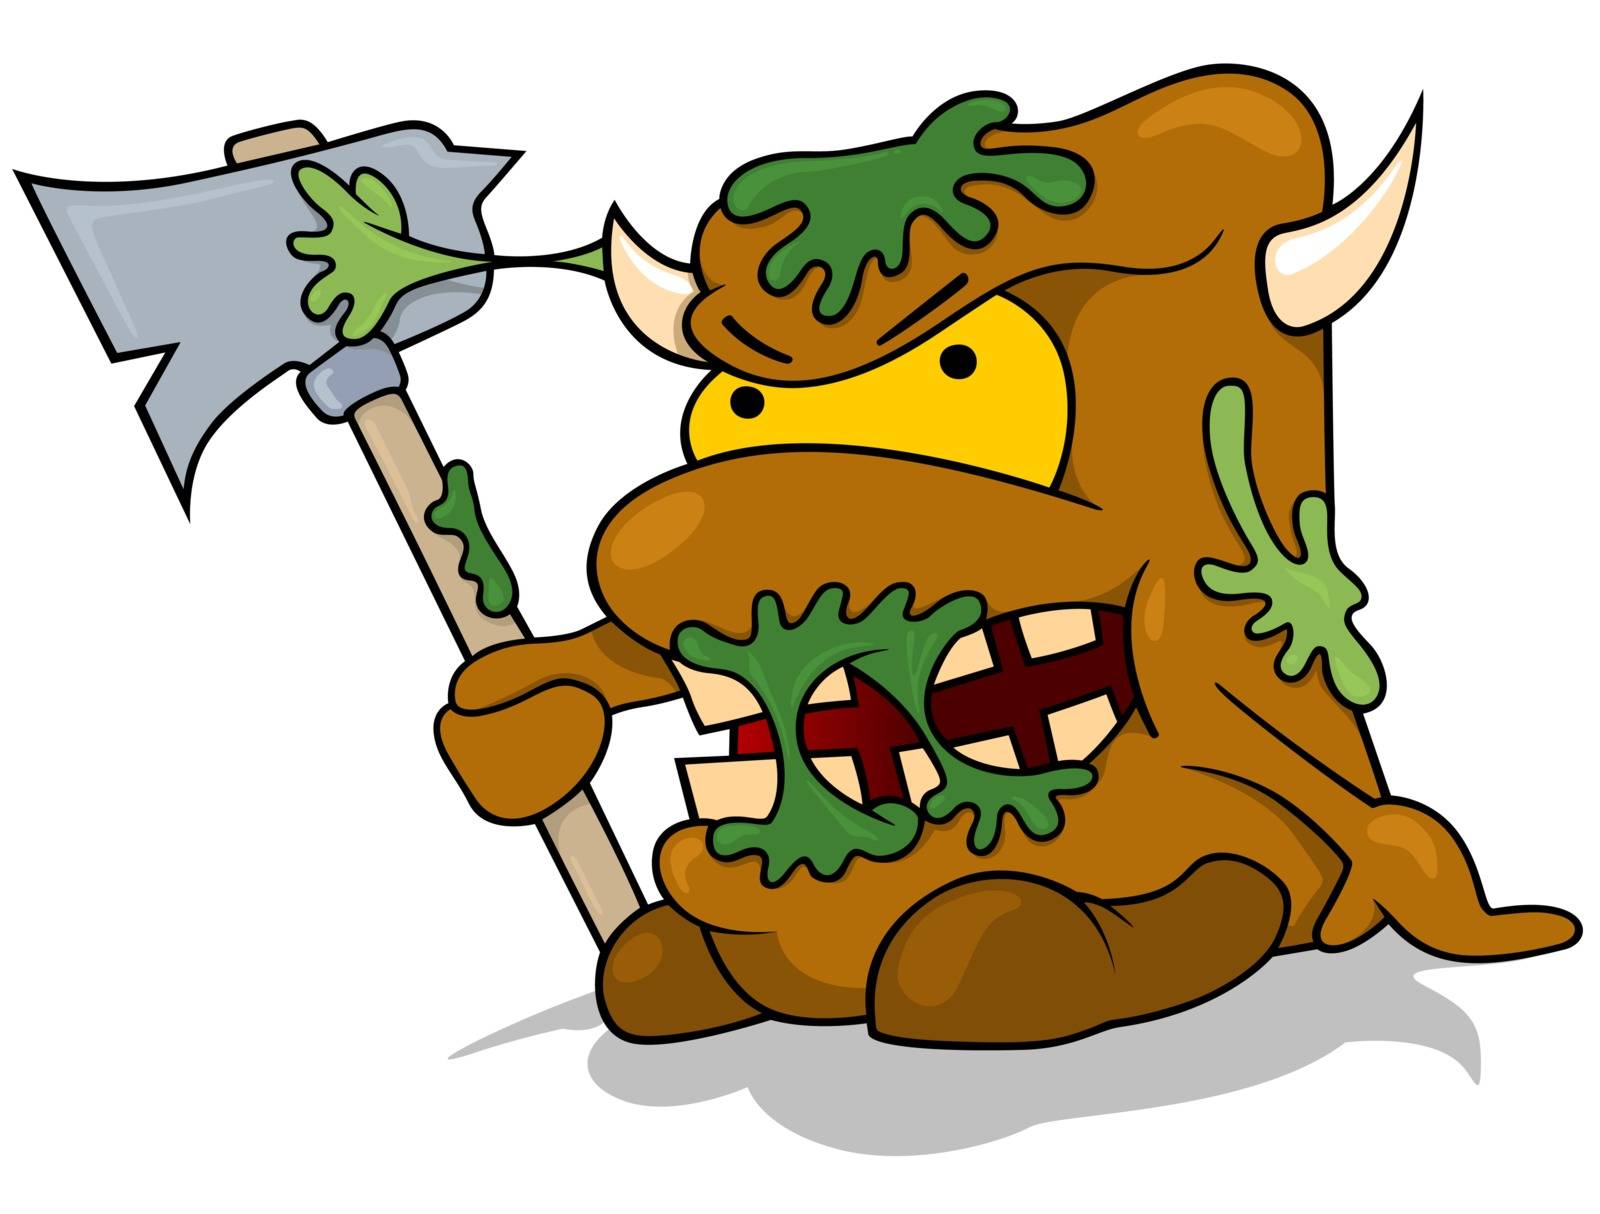 Garbage Monster - Colored Cartoon Illustration, Vector